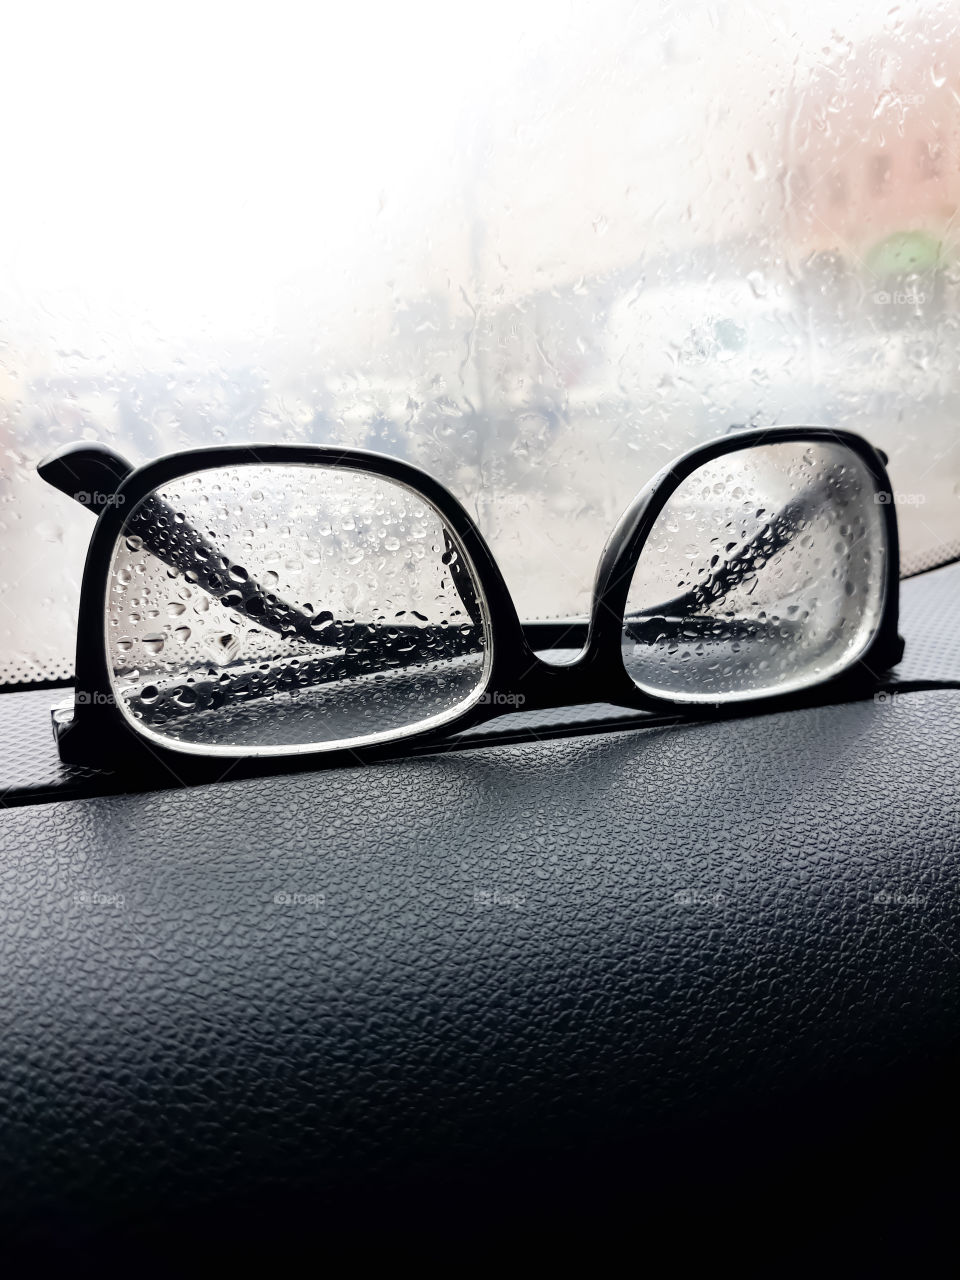 Eyeglasses placed near the car window.